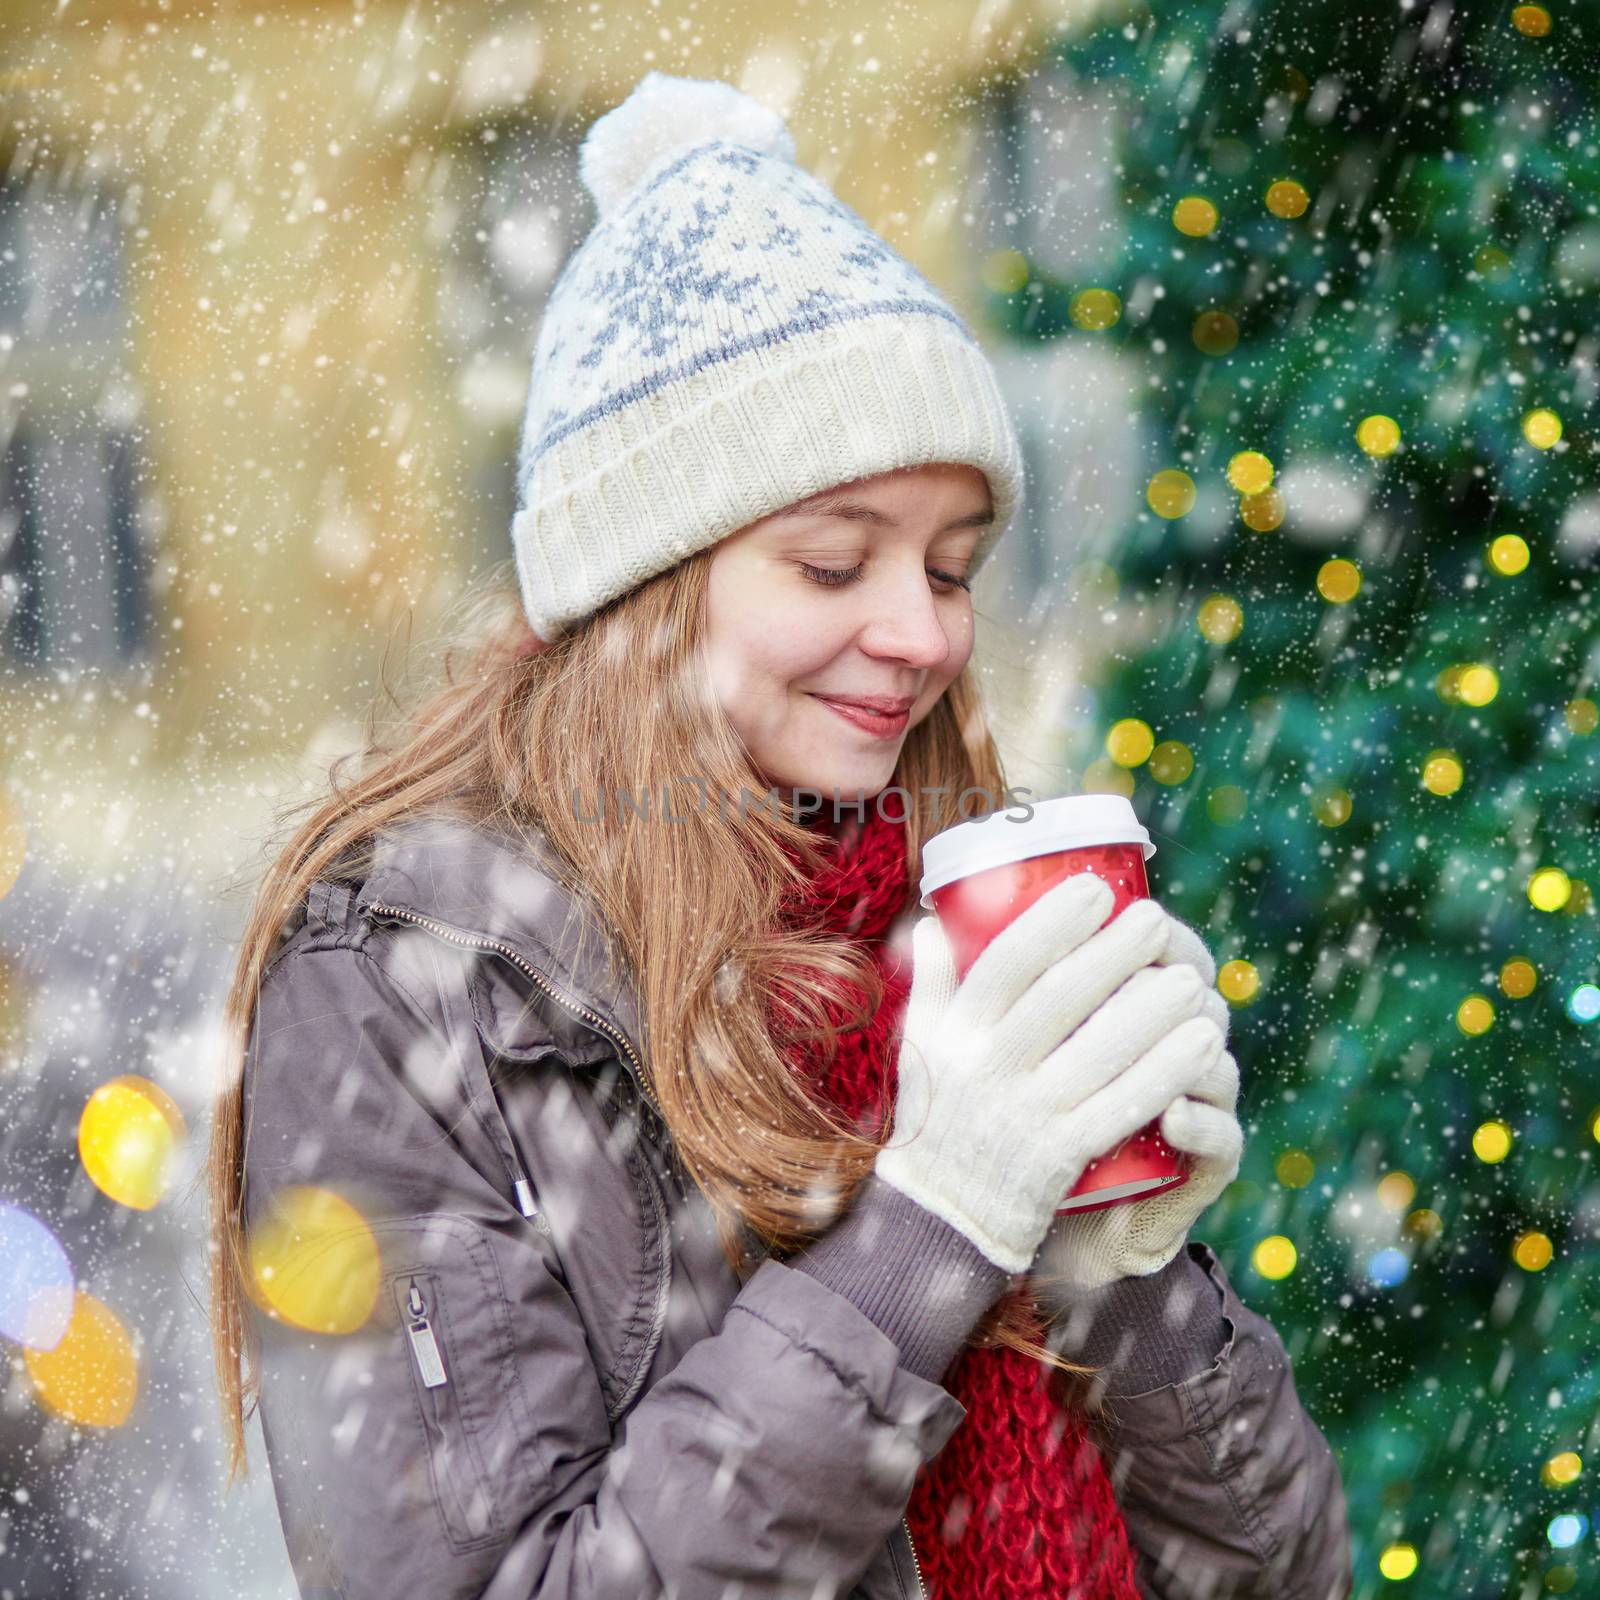 Girl drinking take away coffee, hot chocolate or eggnog near decorated Christmas tree during snowfall